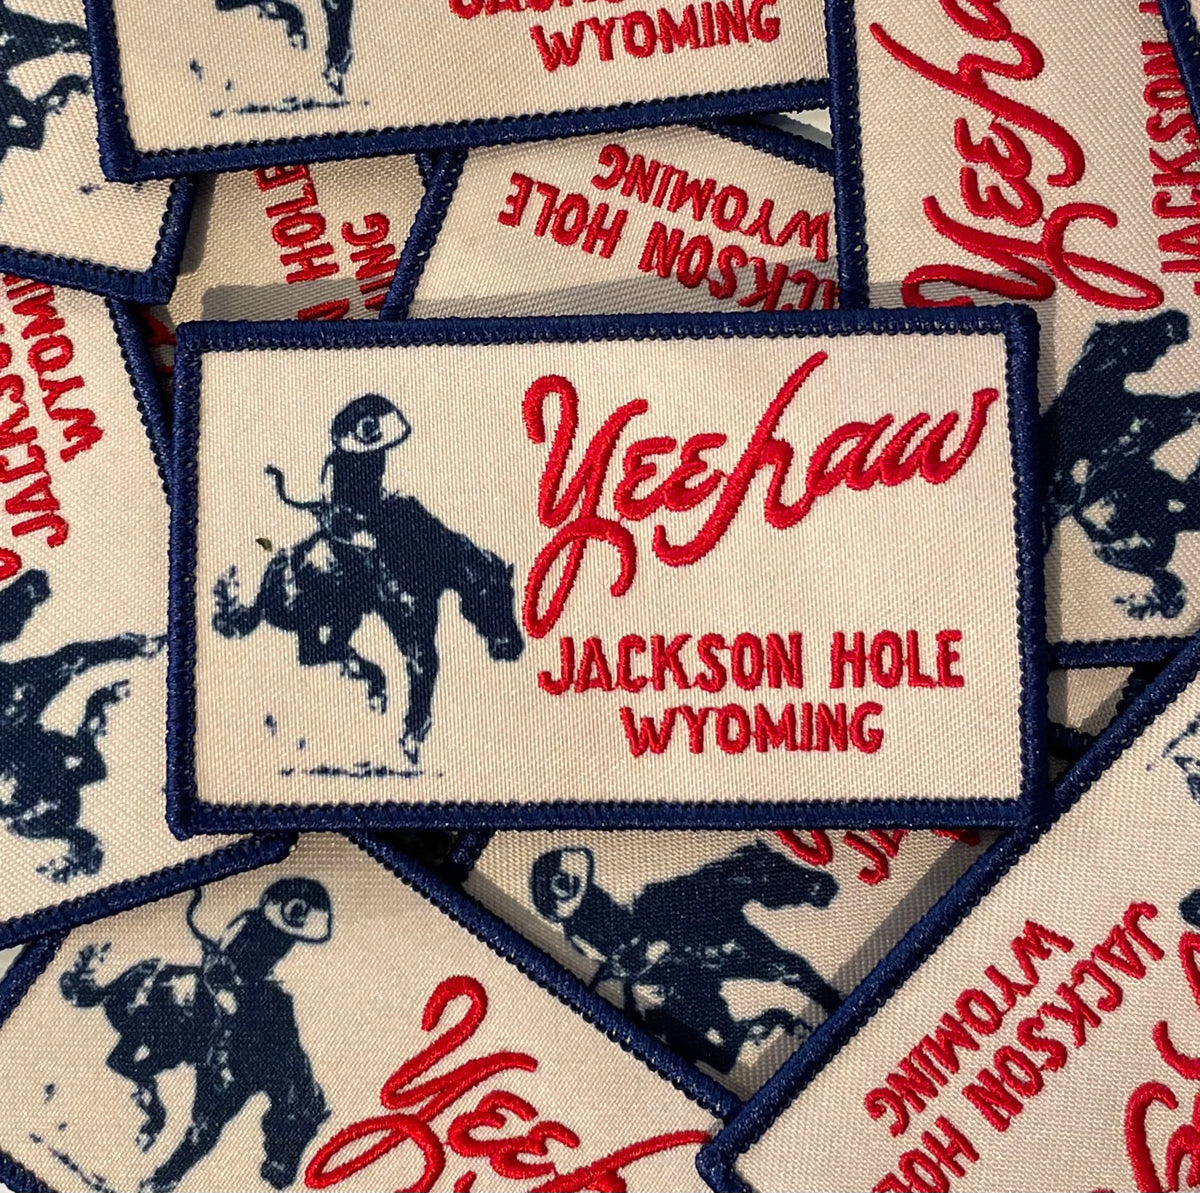 Yeehaw Jackson Wyoming Patch